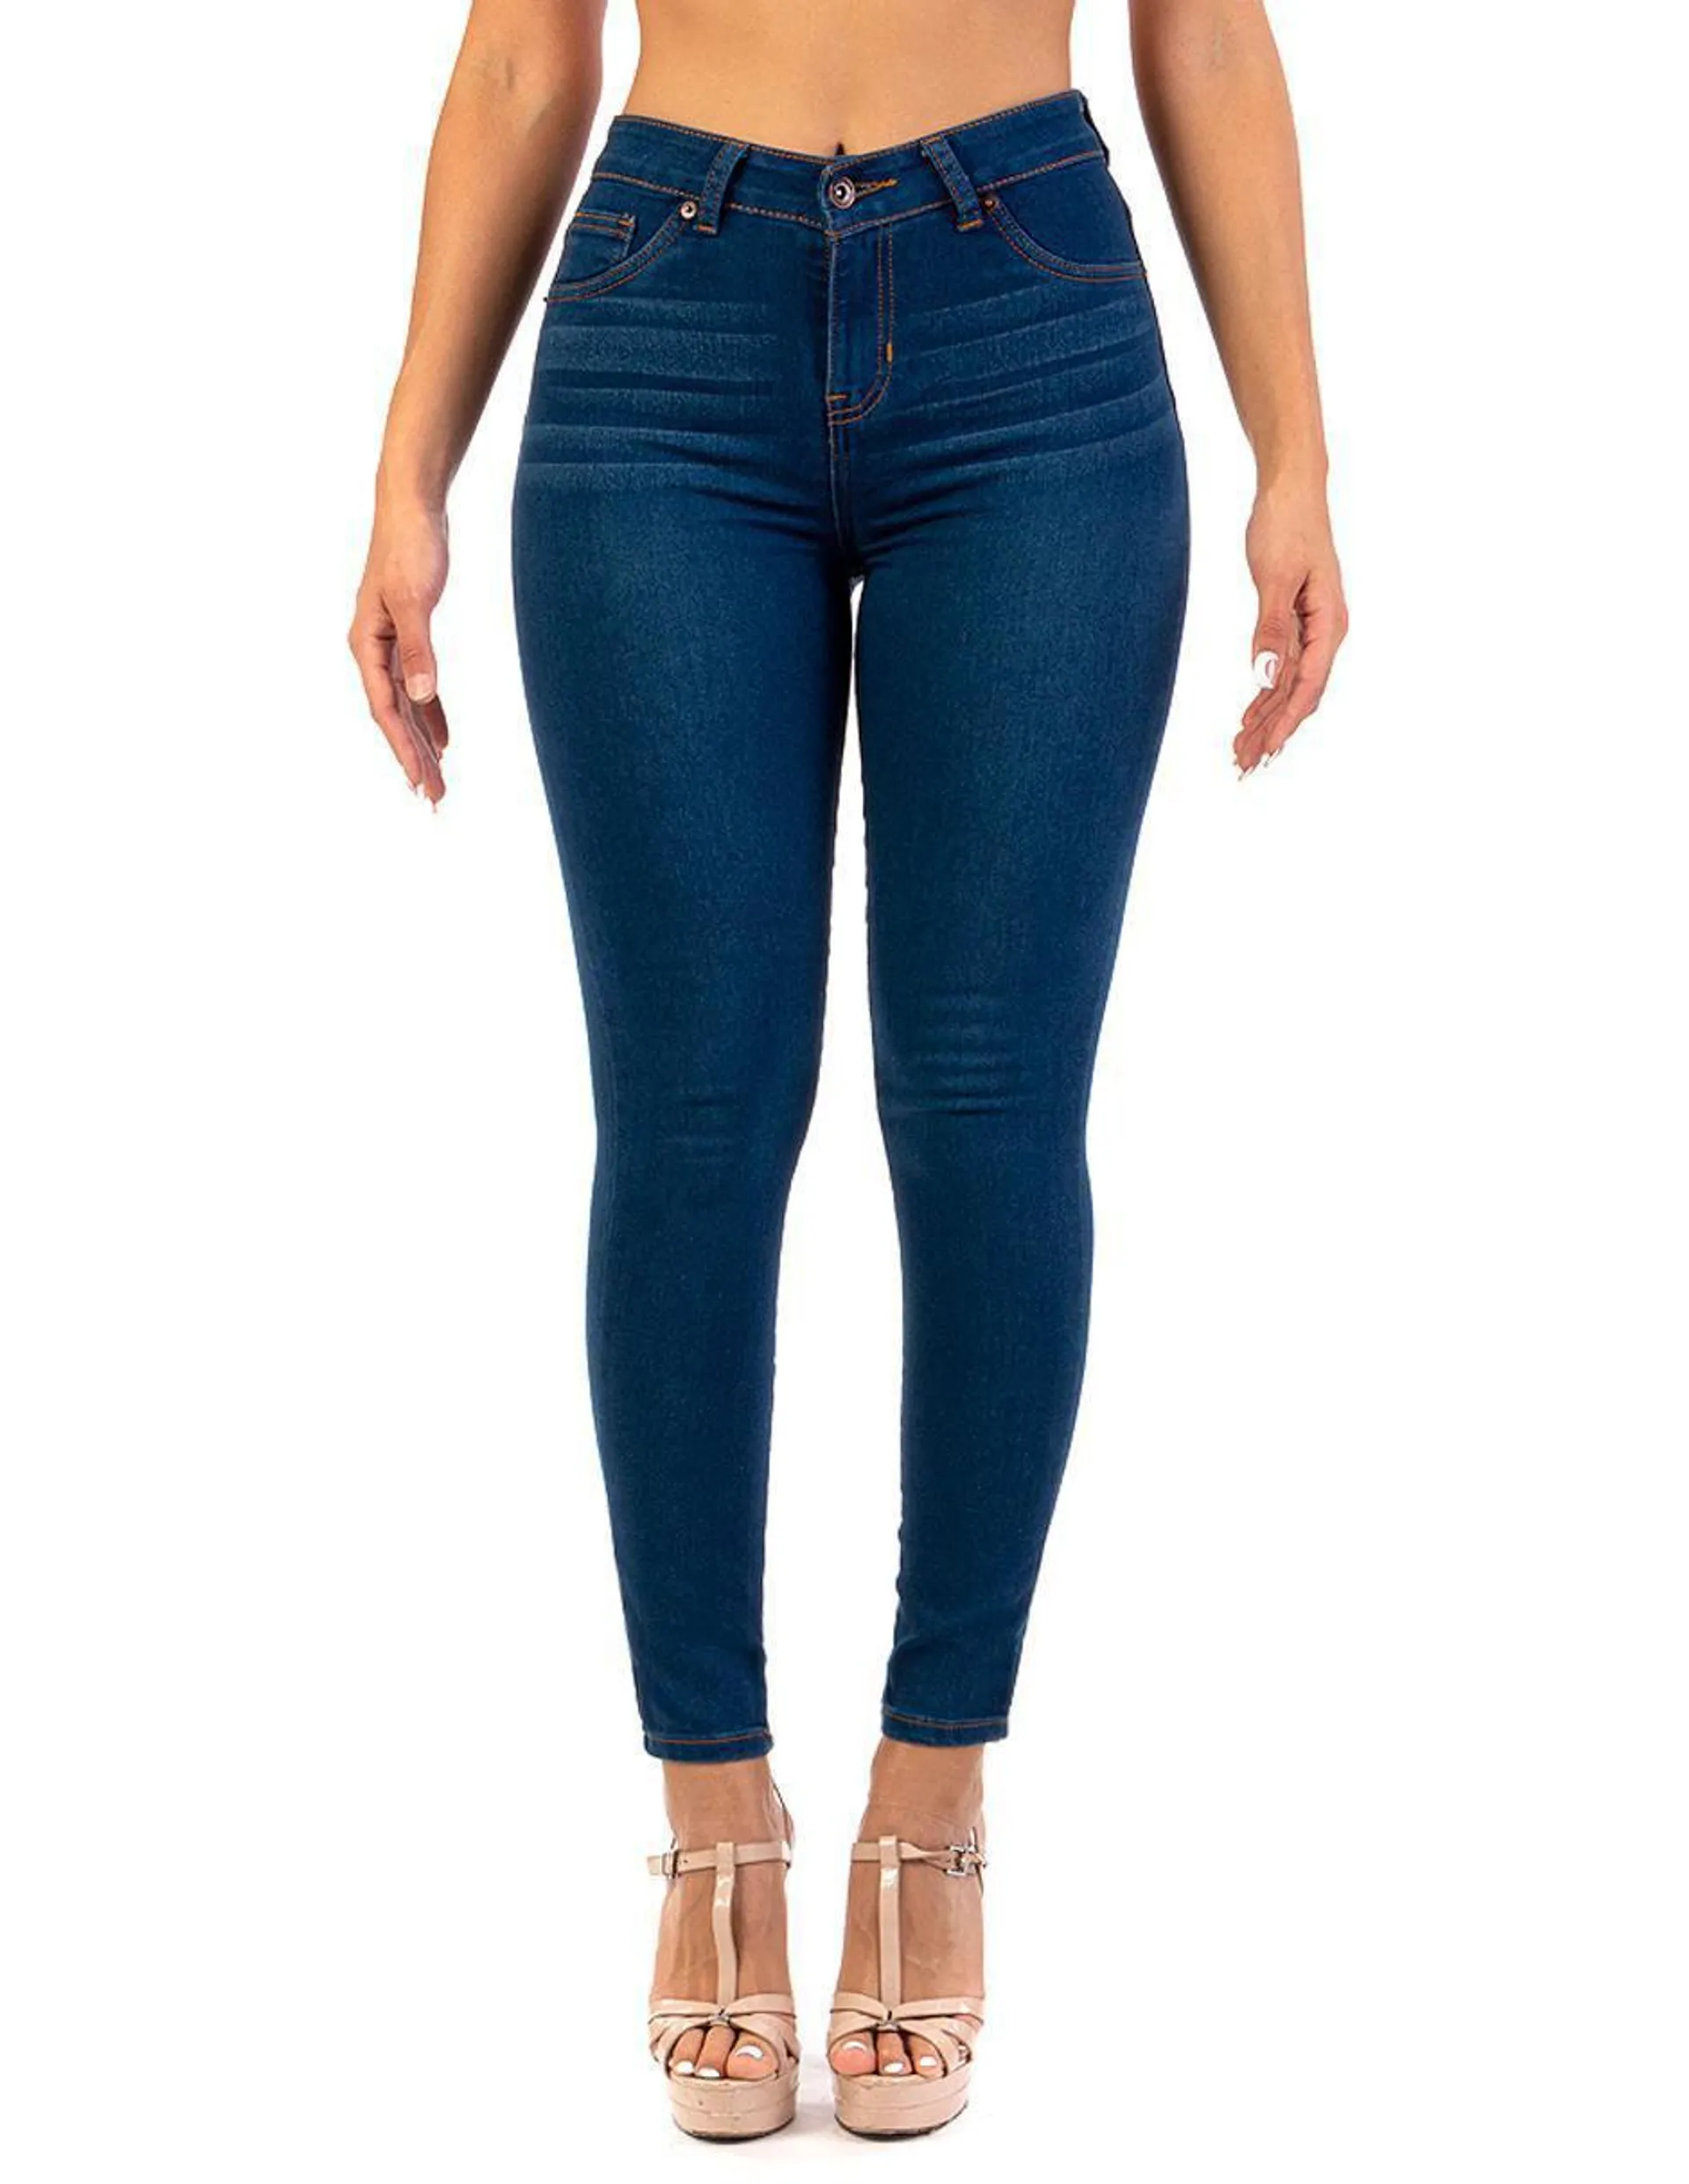 Jeans skinny Opp's Jeans 101001-f1001 lavado obscuro corte cintura alta para mujer